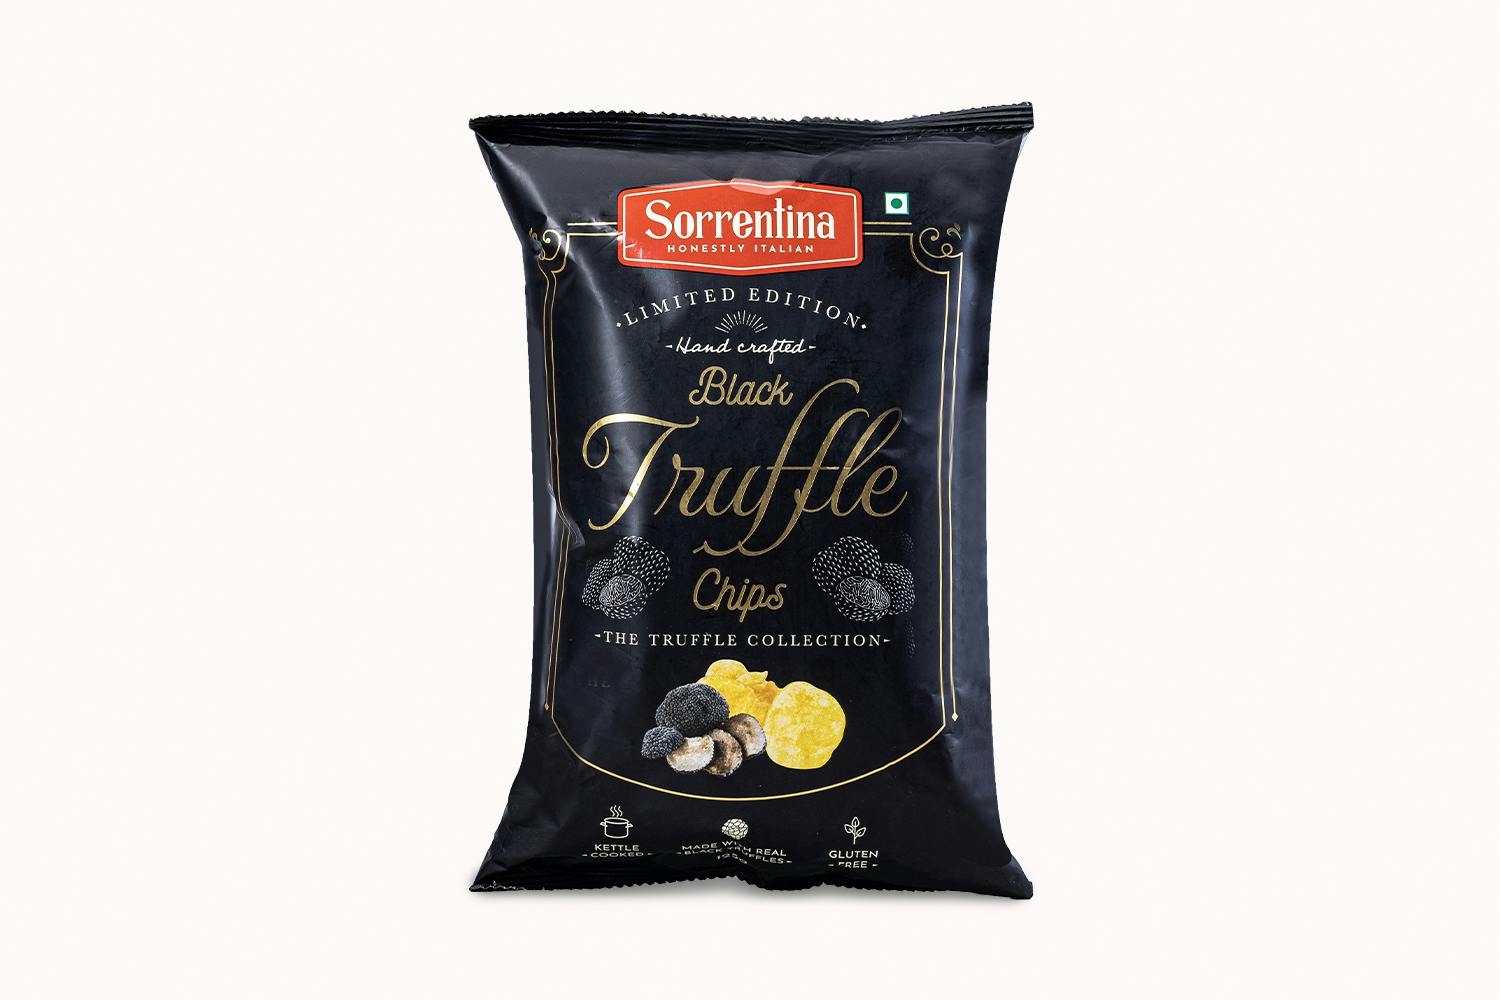 Sorrentina Truffle Chips